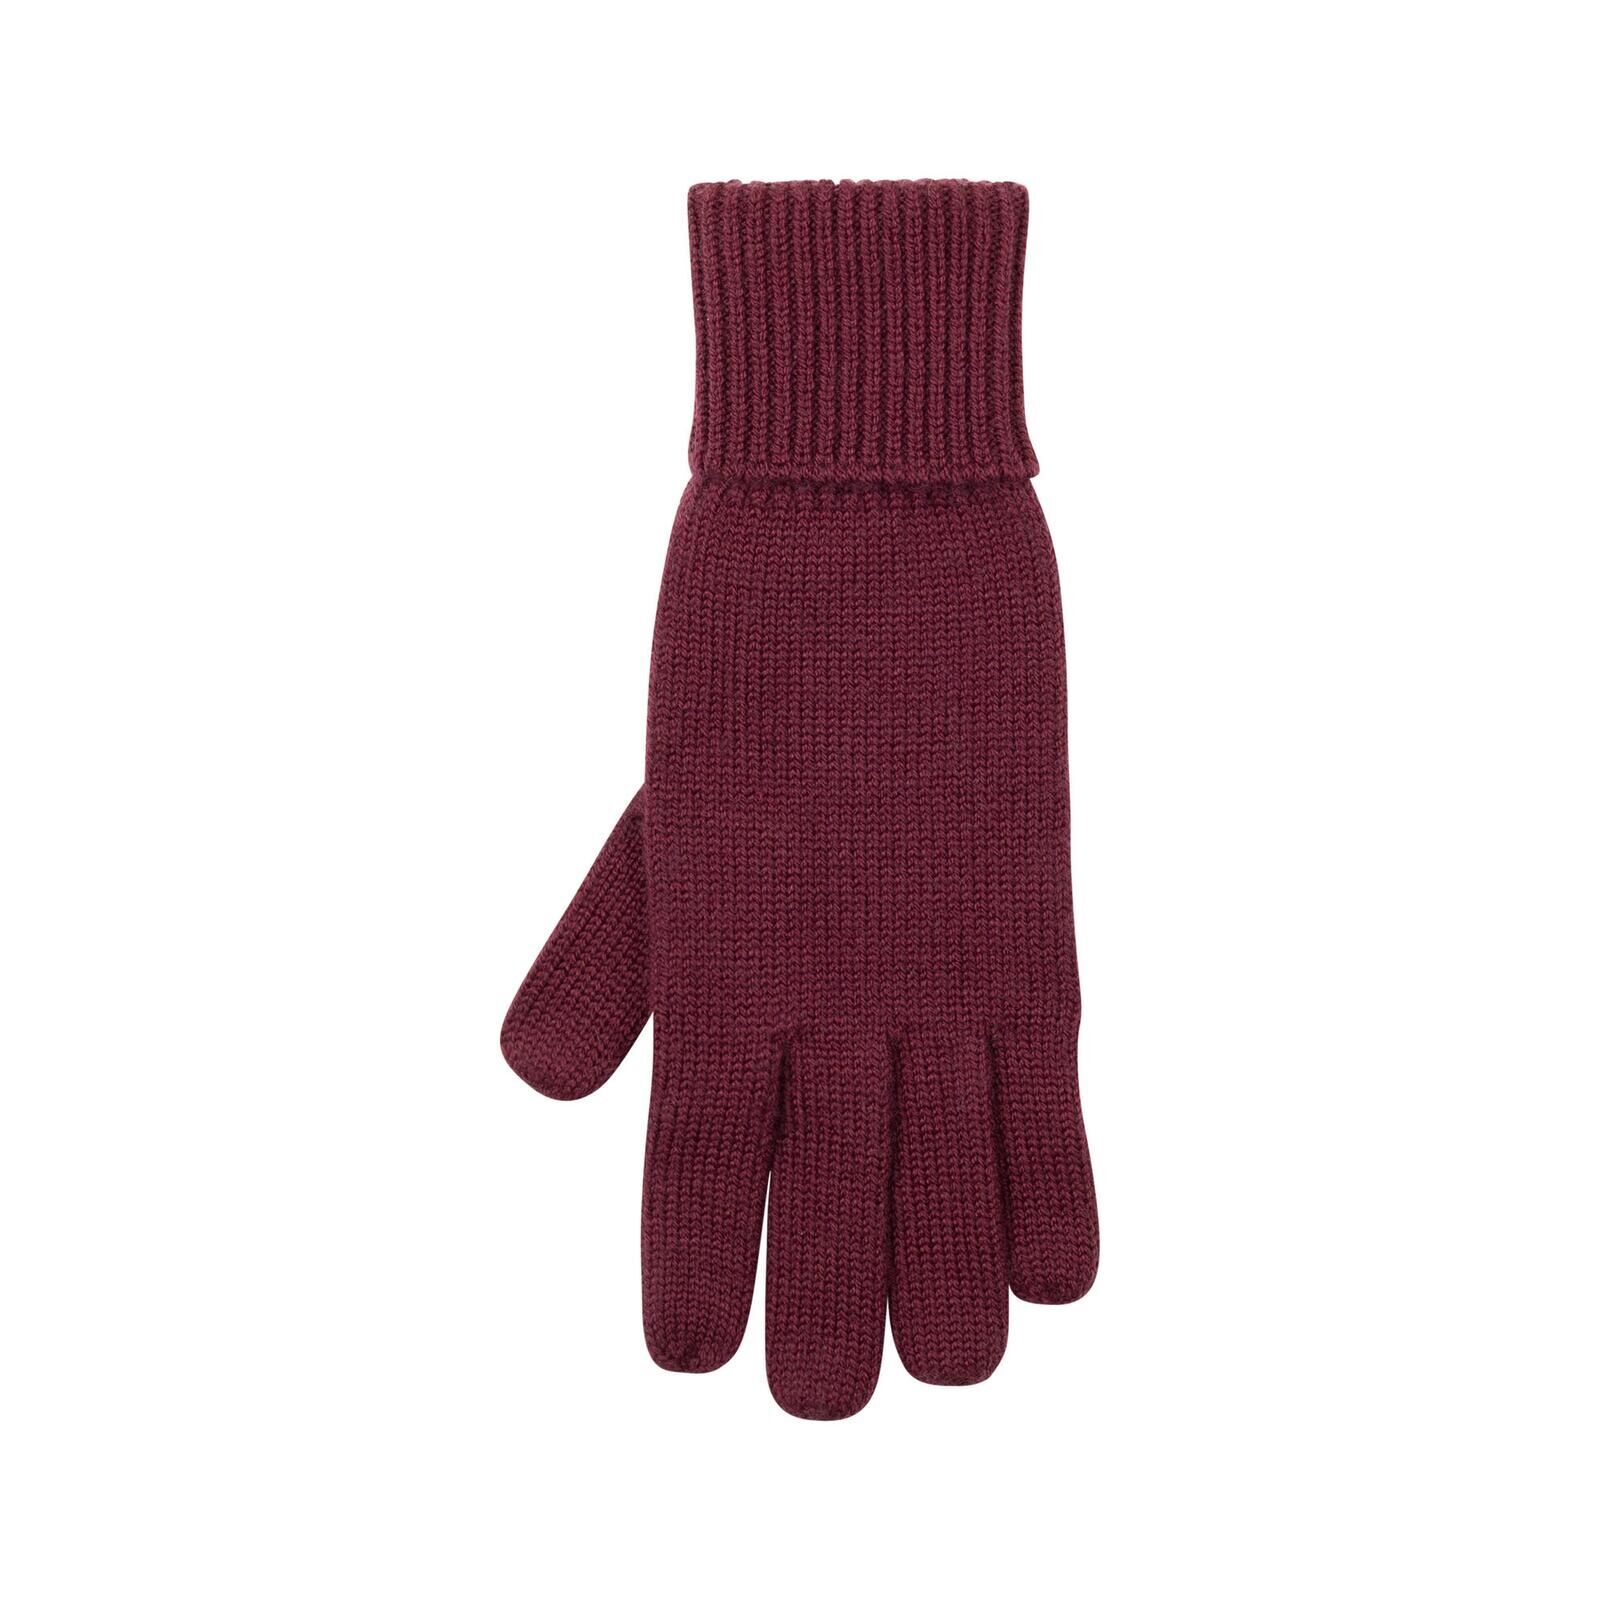 PURE PURE Damen Handschuhe burgund 7,5